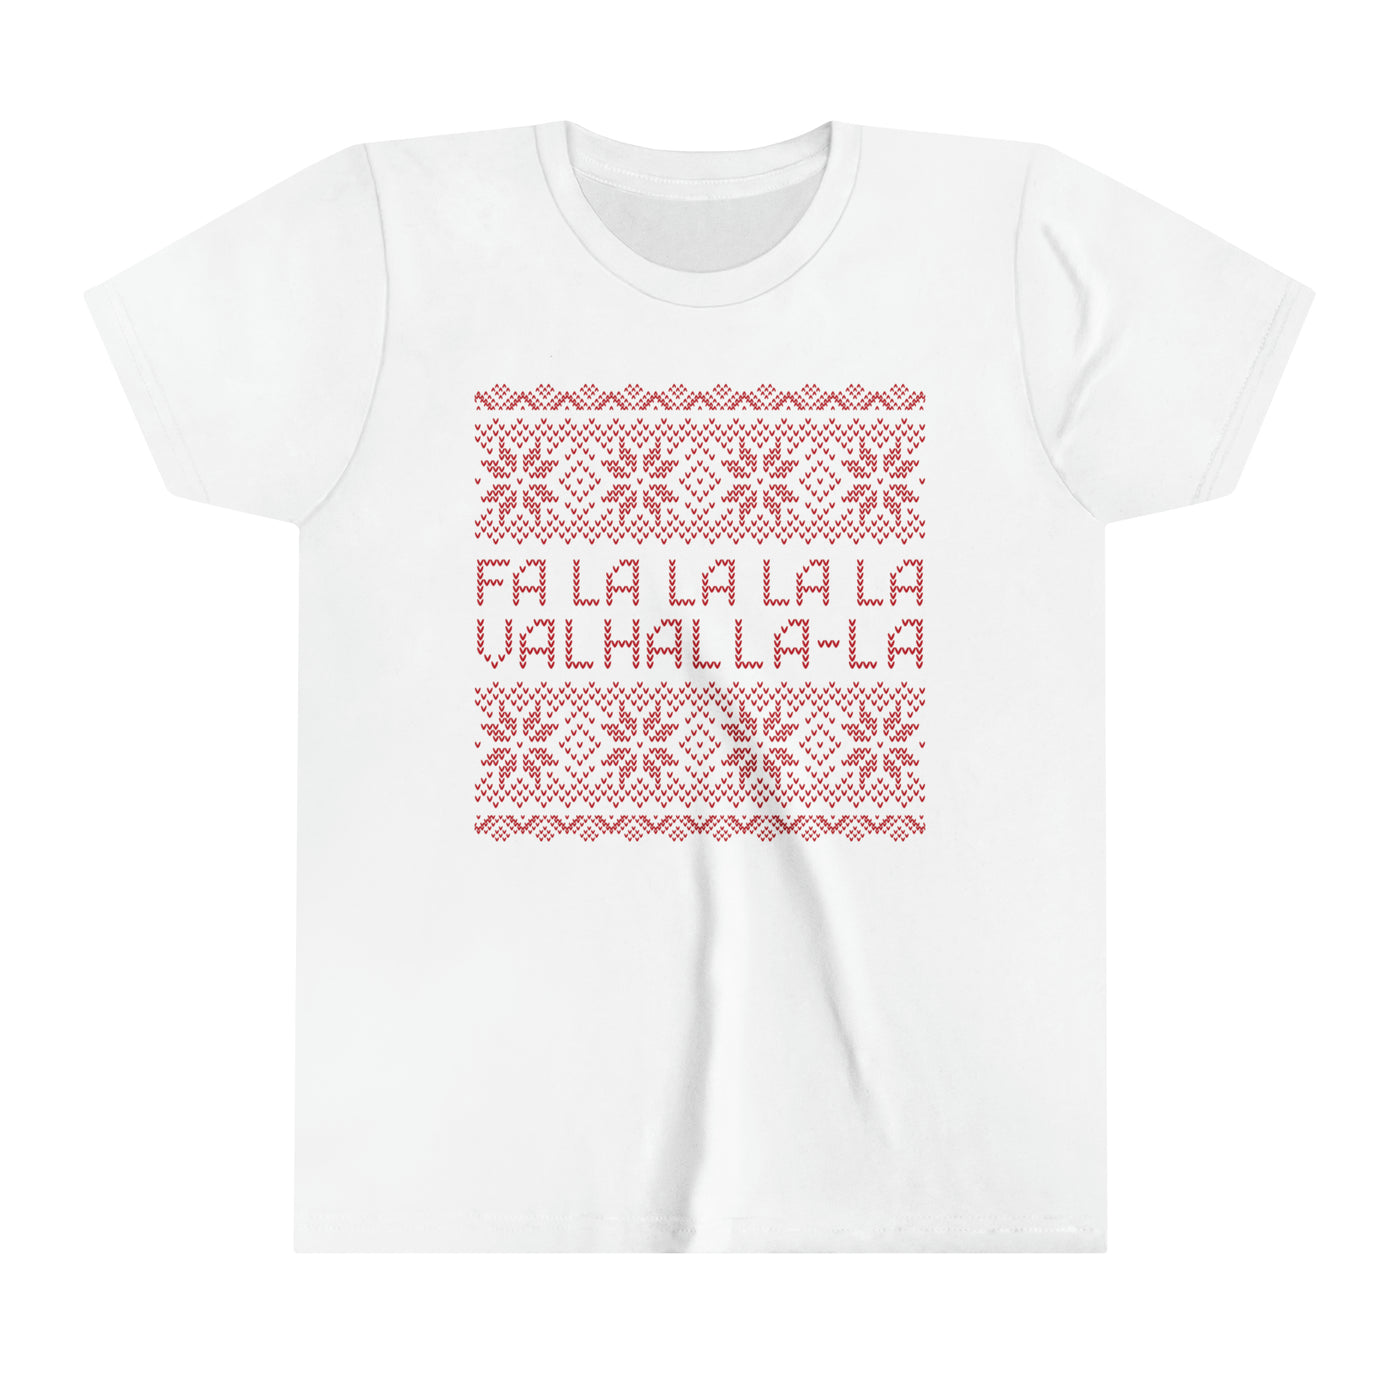 Valhalla Ugly Sweater Kids T-Shirt